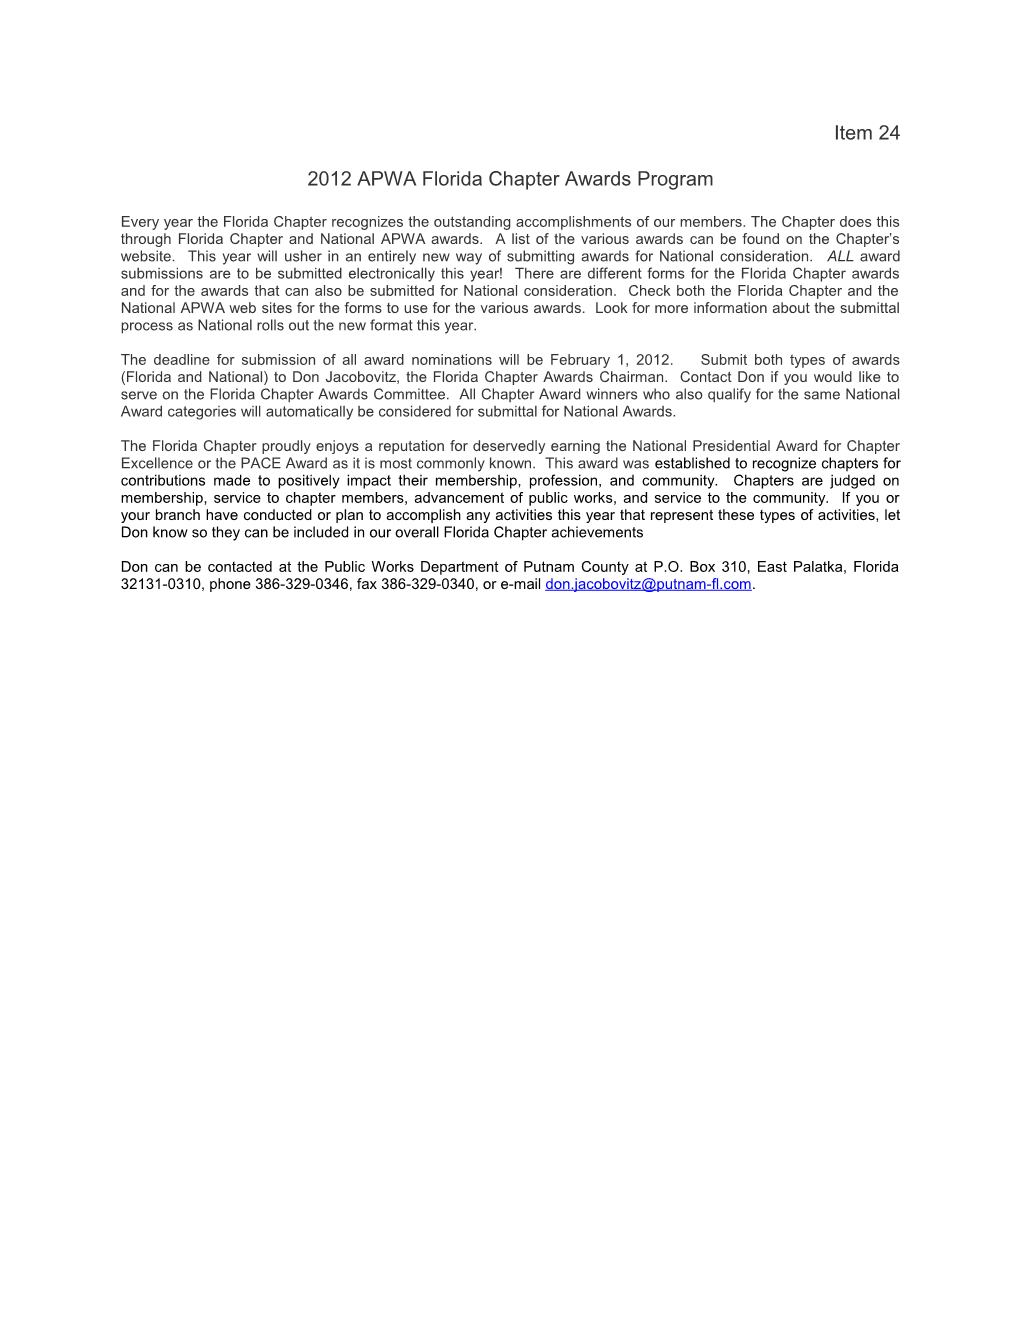 2012 APWA Florida Chapter Awards Program